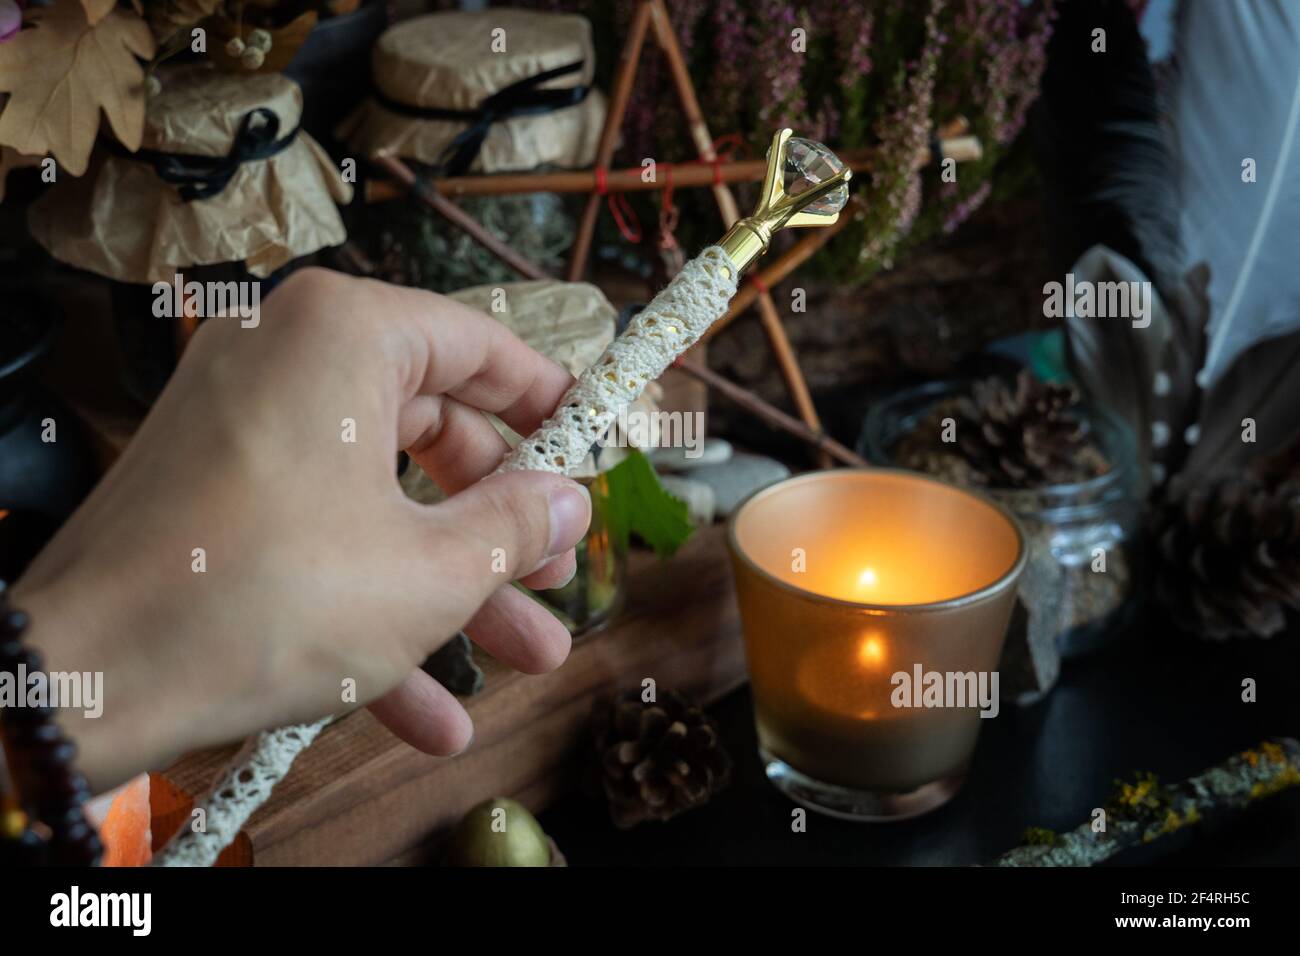 Woman hand is holding magic wand performing a pagan ritual. Stock Photo